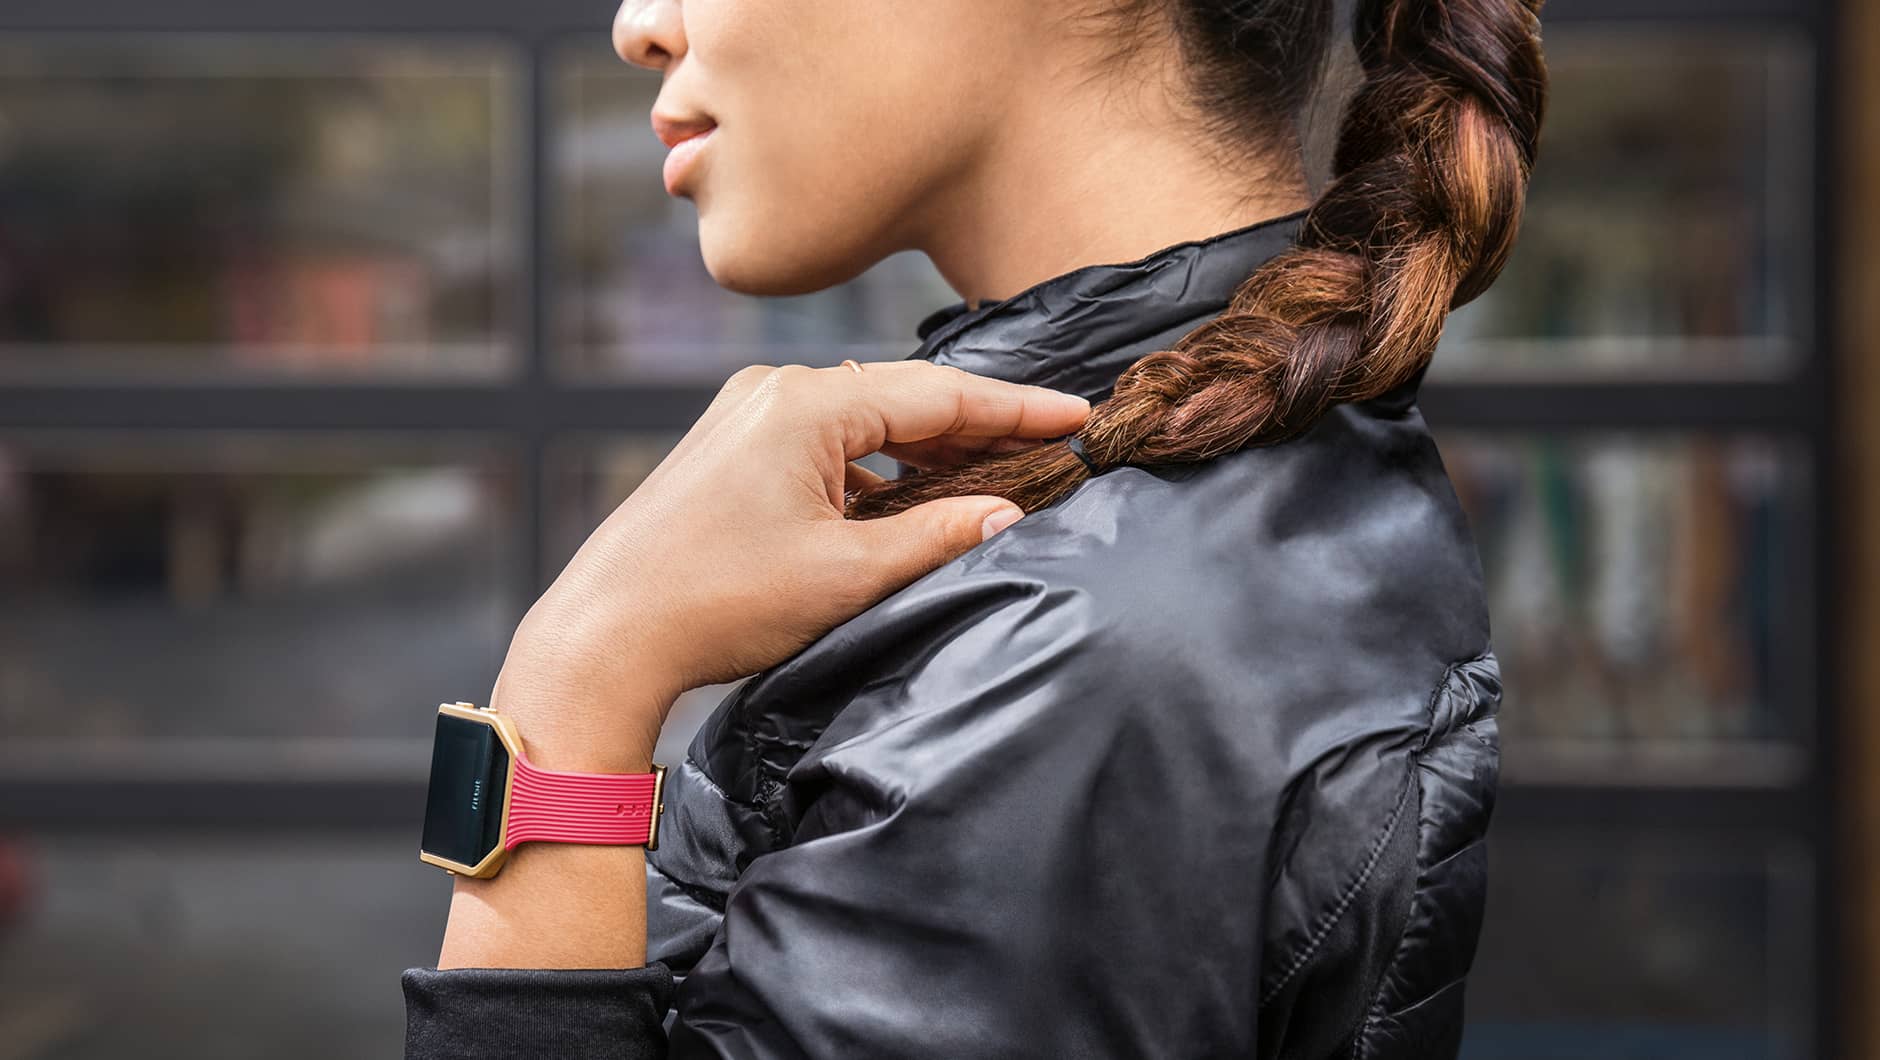 Fitbit Blaze Smart Fitness Watch Black for sale online Large 